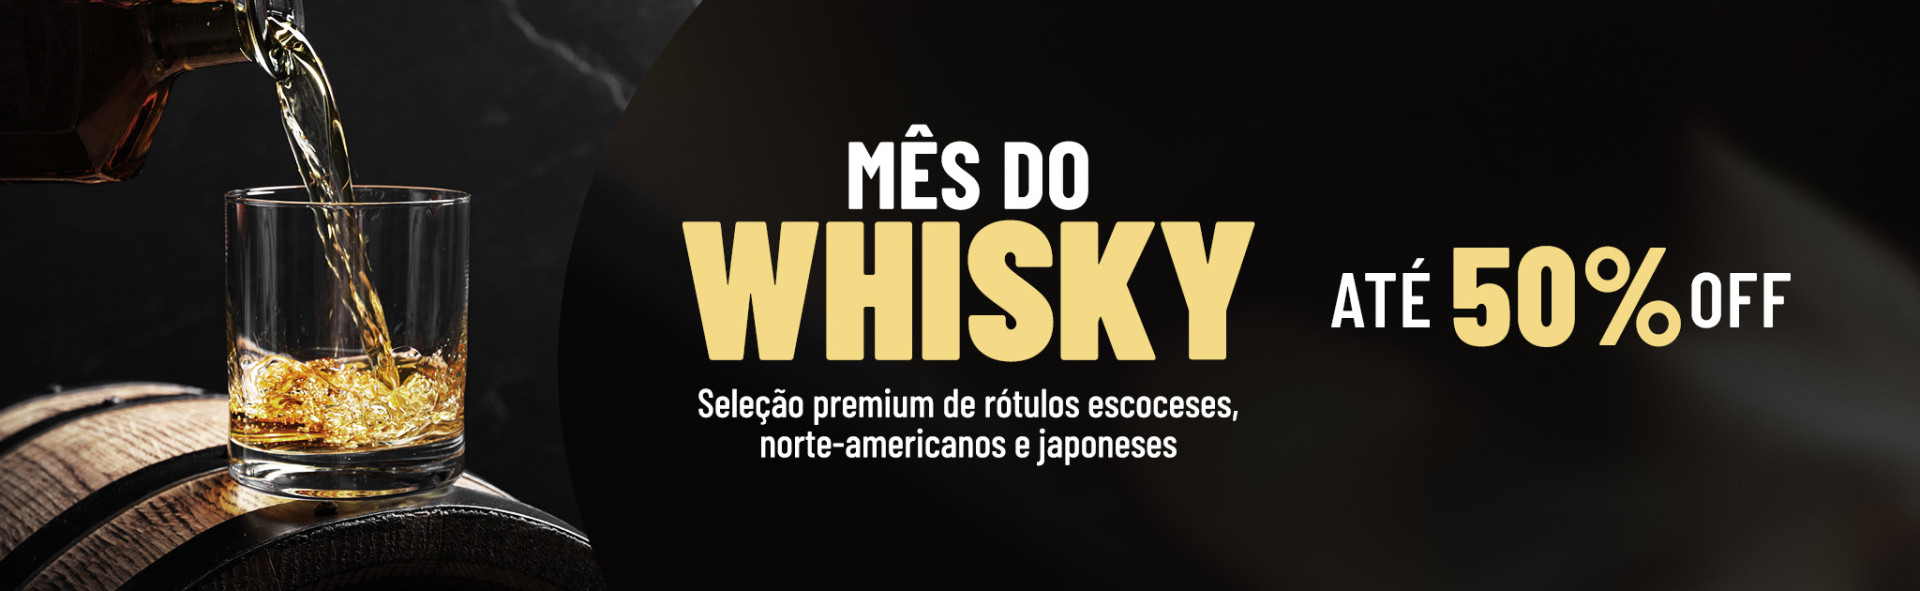 Mês do Whisky